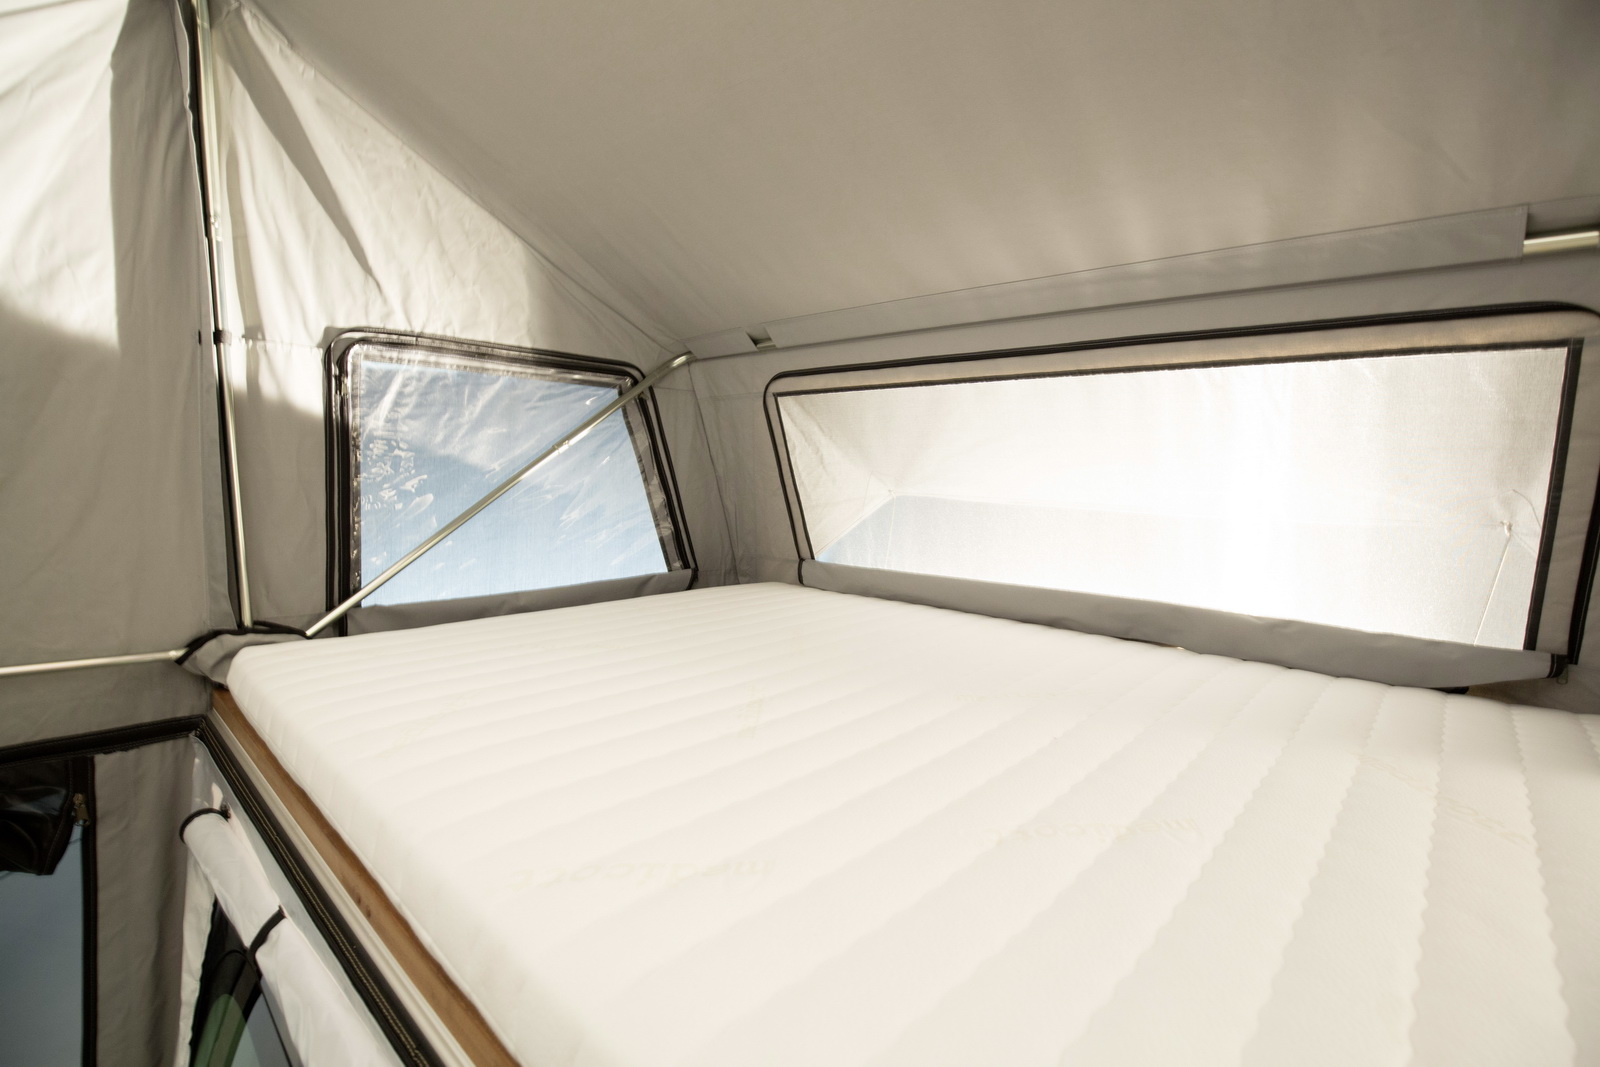 TopDog Dachzelt von 3DOG camping auf Mercedes-Benz Citan Basis - Interieur ;TopDog rooftop tent from 3DOG camping on Mercedes-Benz Citan base - Interior;